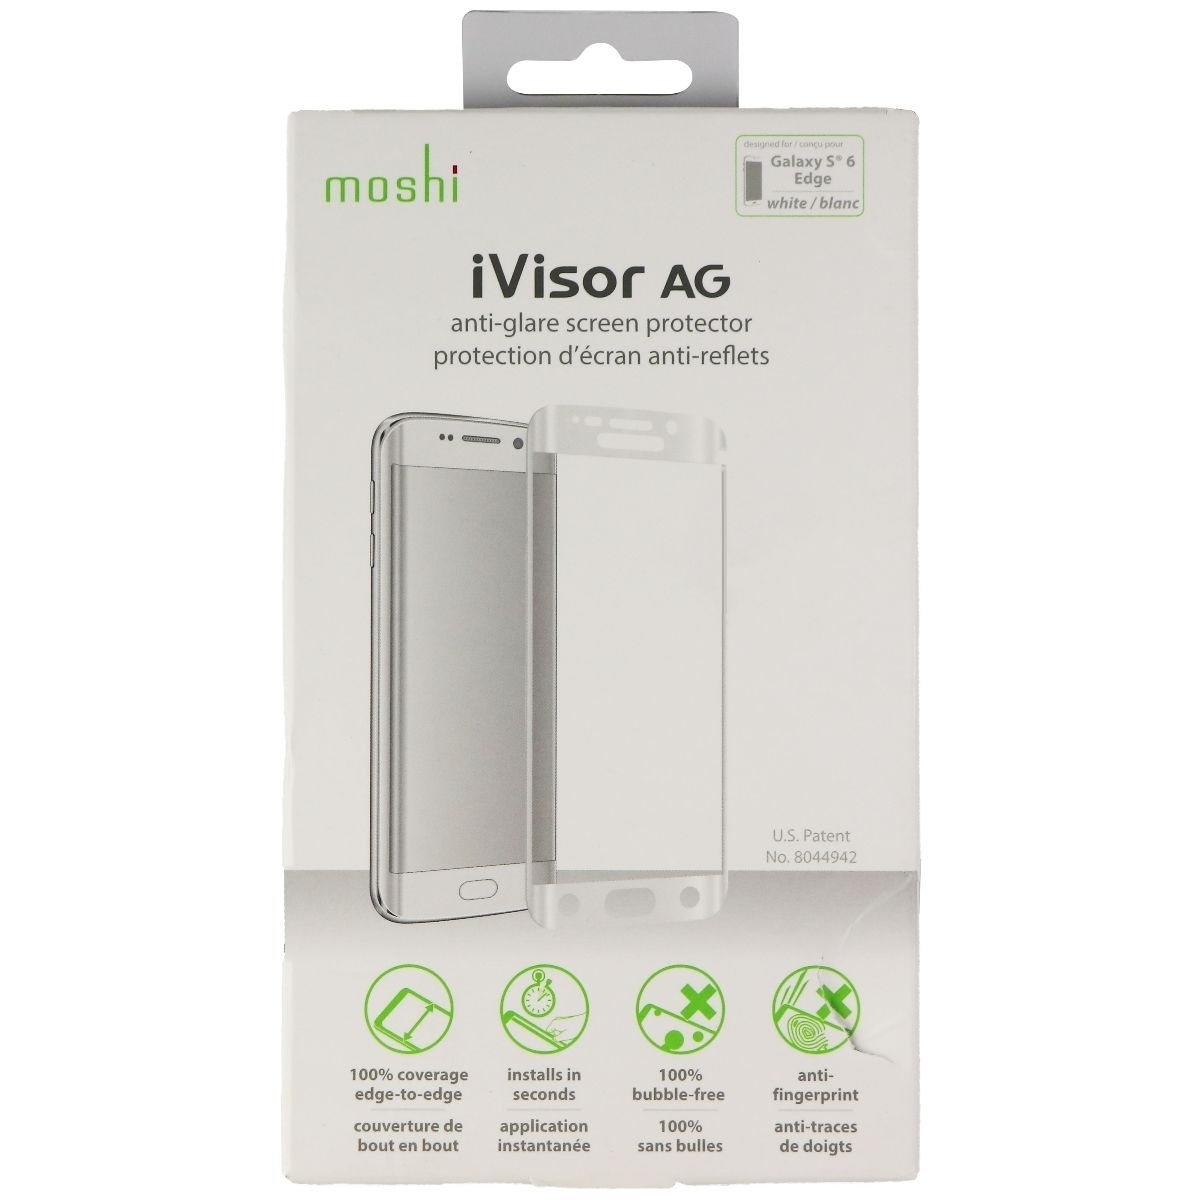 Moshi IVisor AG Anti-Glare Screen Protector For Galaxy S6 Edge - Clear/White